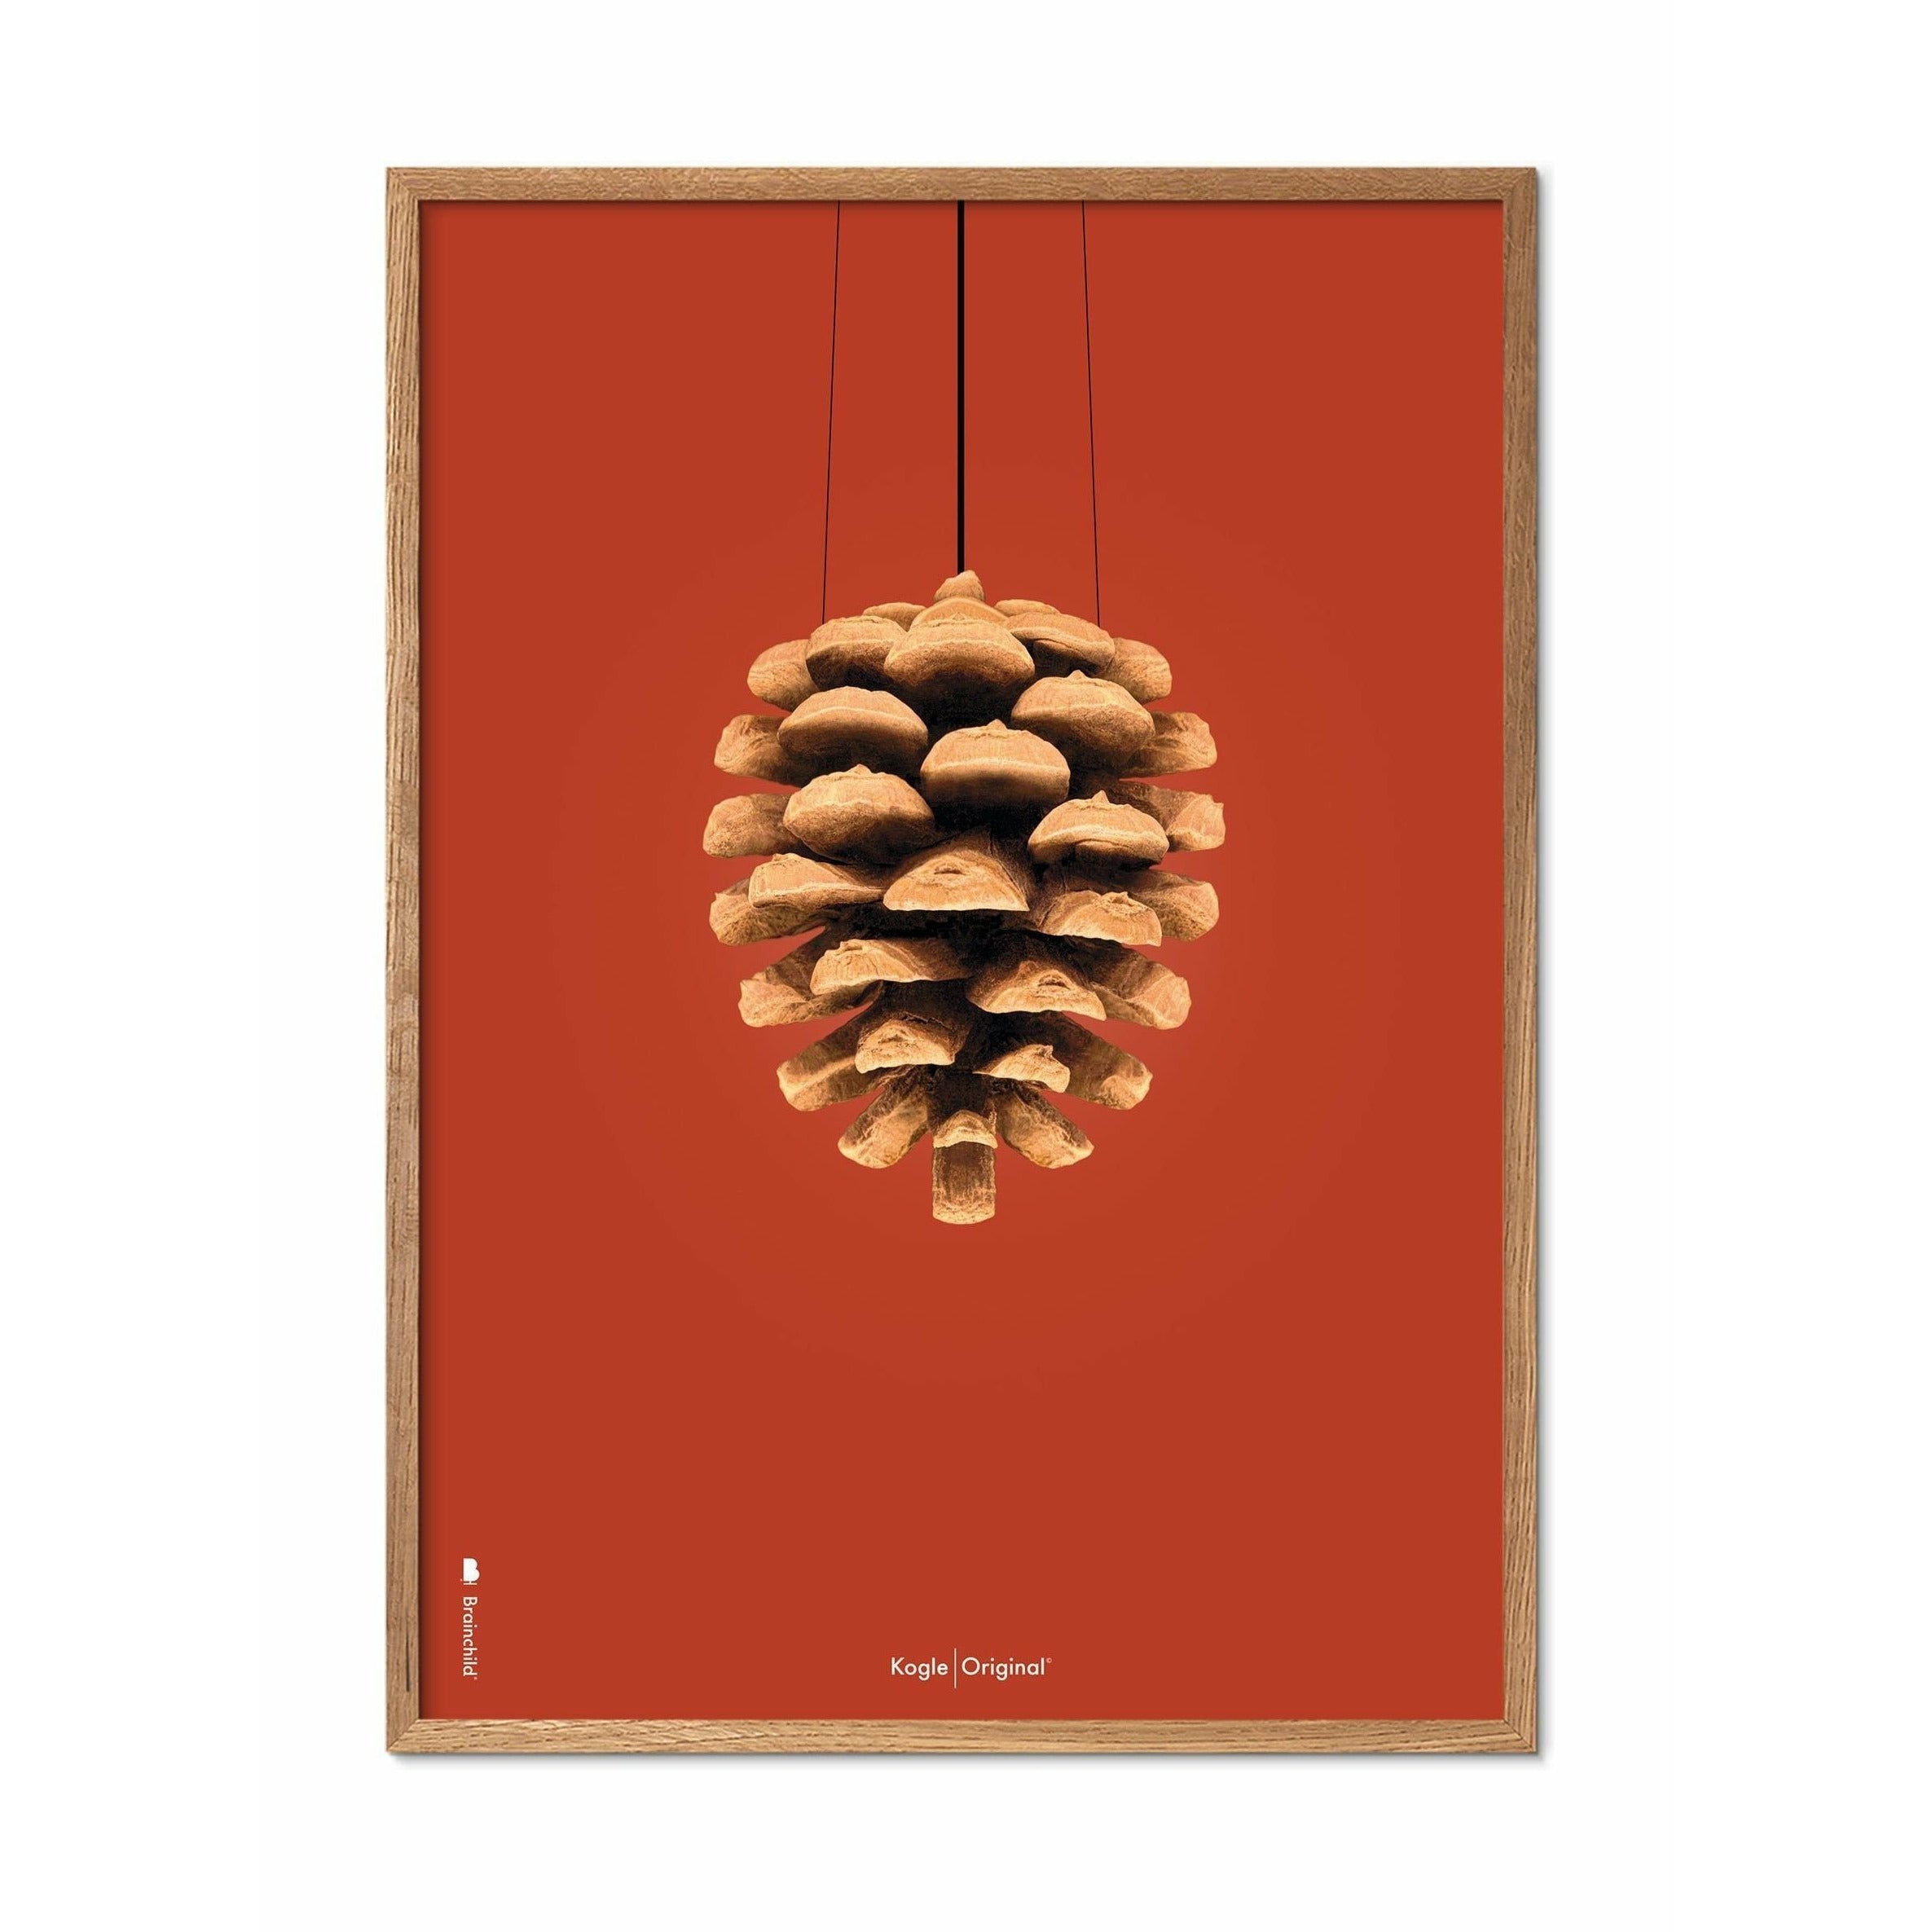 Brainchild Kogle Klassisk Plakat, Ramme I Lyst Træ A5, Rød Baggrund